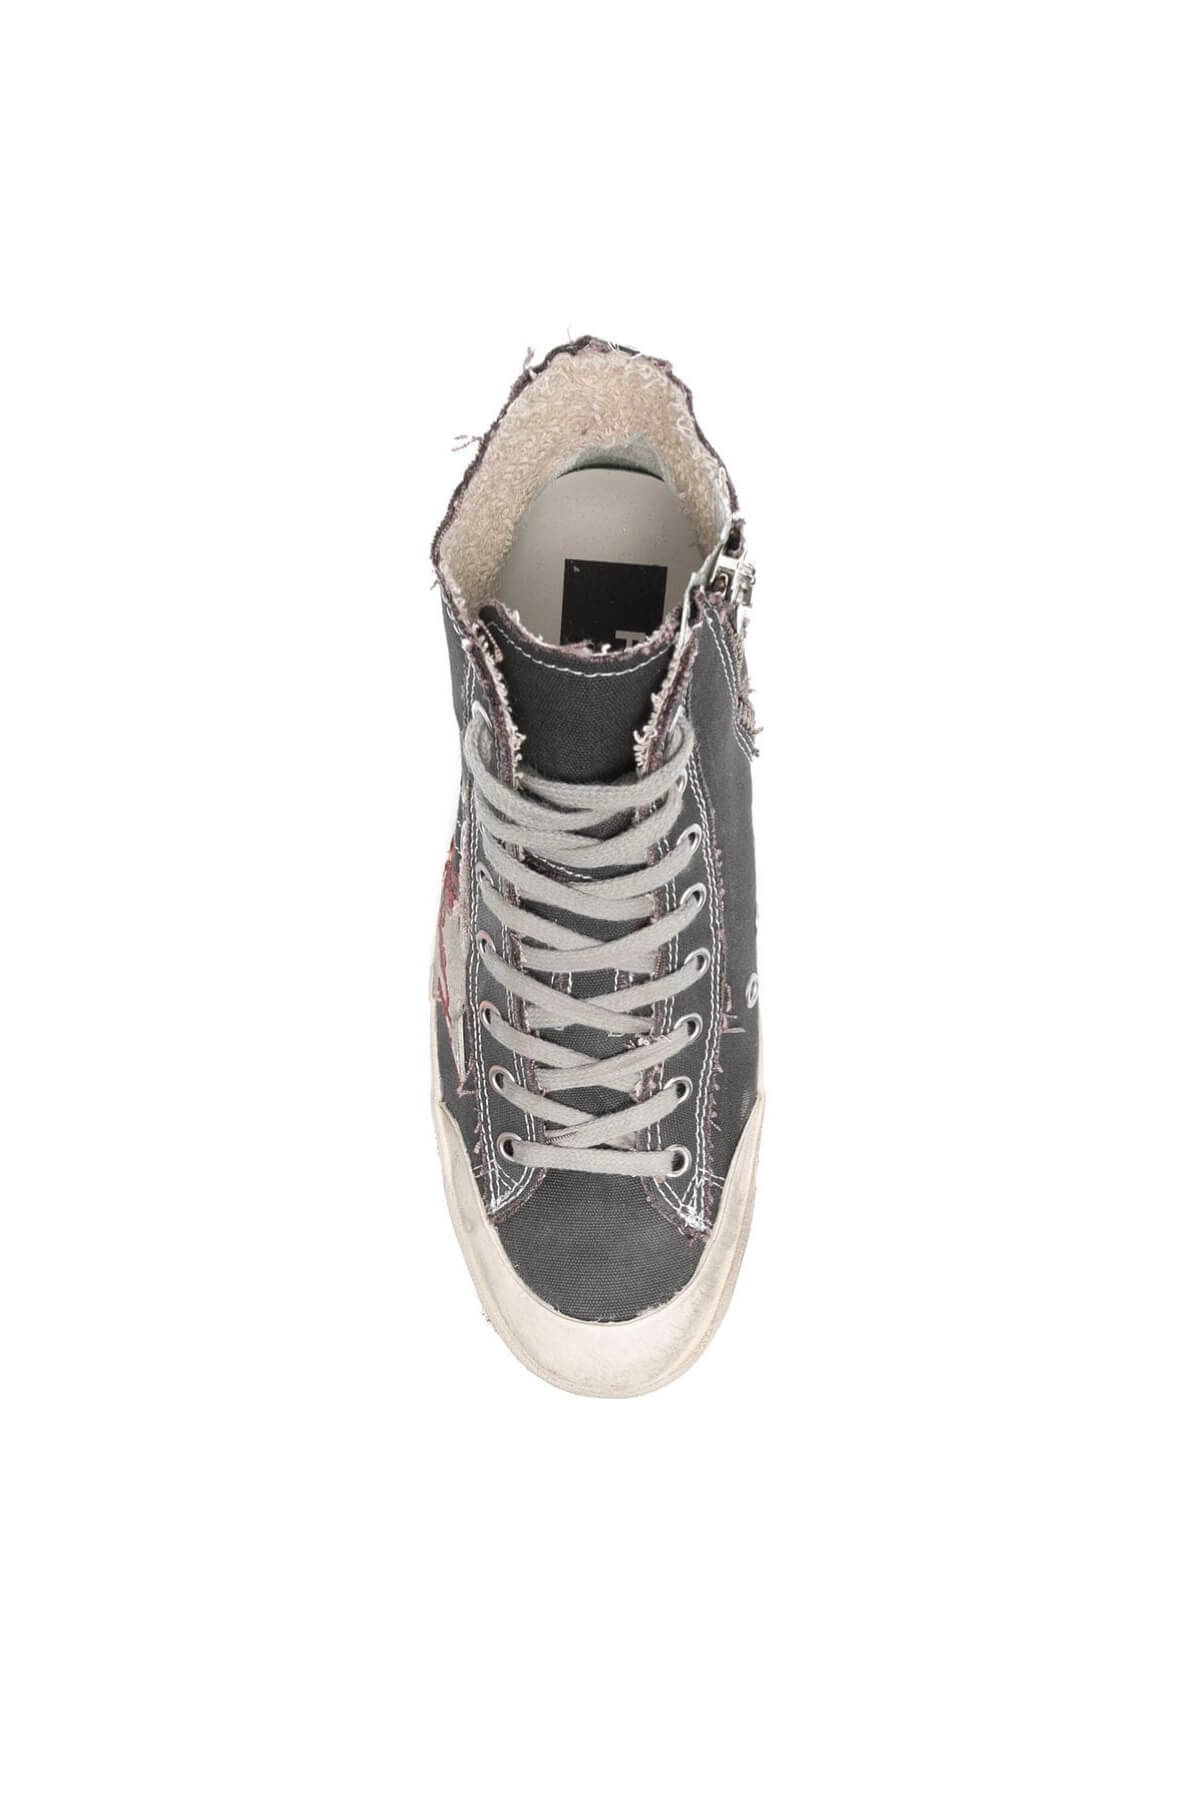 Golden Goose Francy Penstar Sneakers - Charcoal Grey/ Ice/ Red